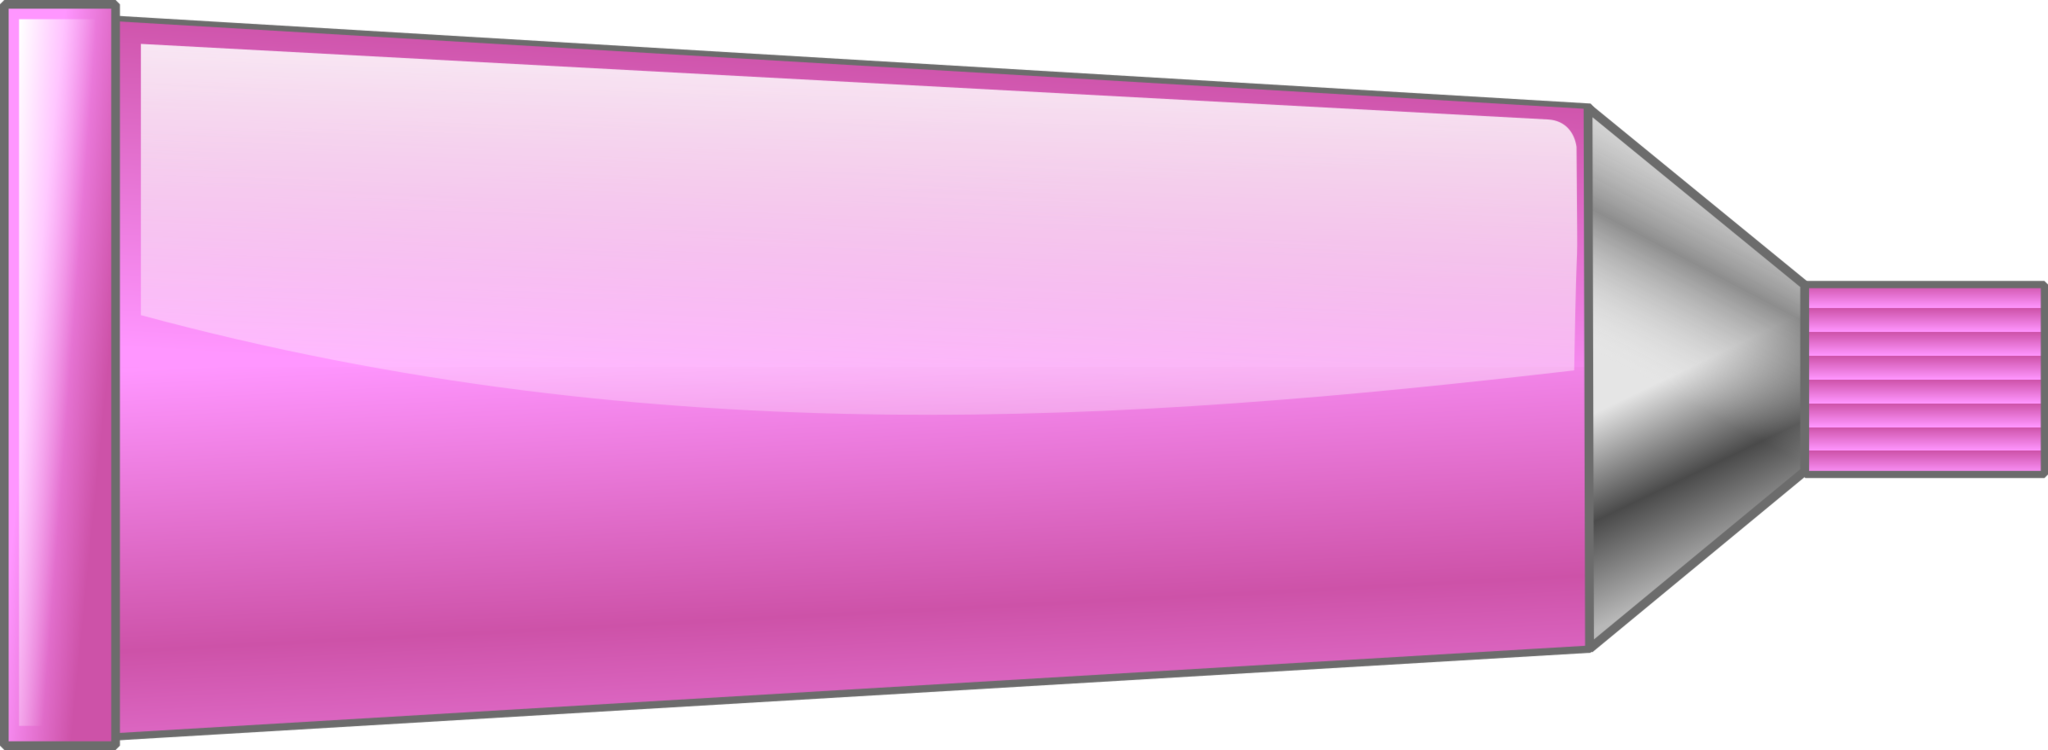 pink mouthwash clipart